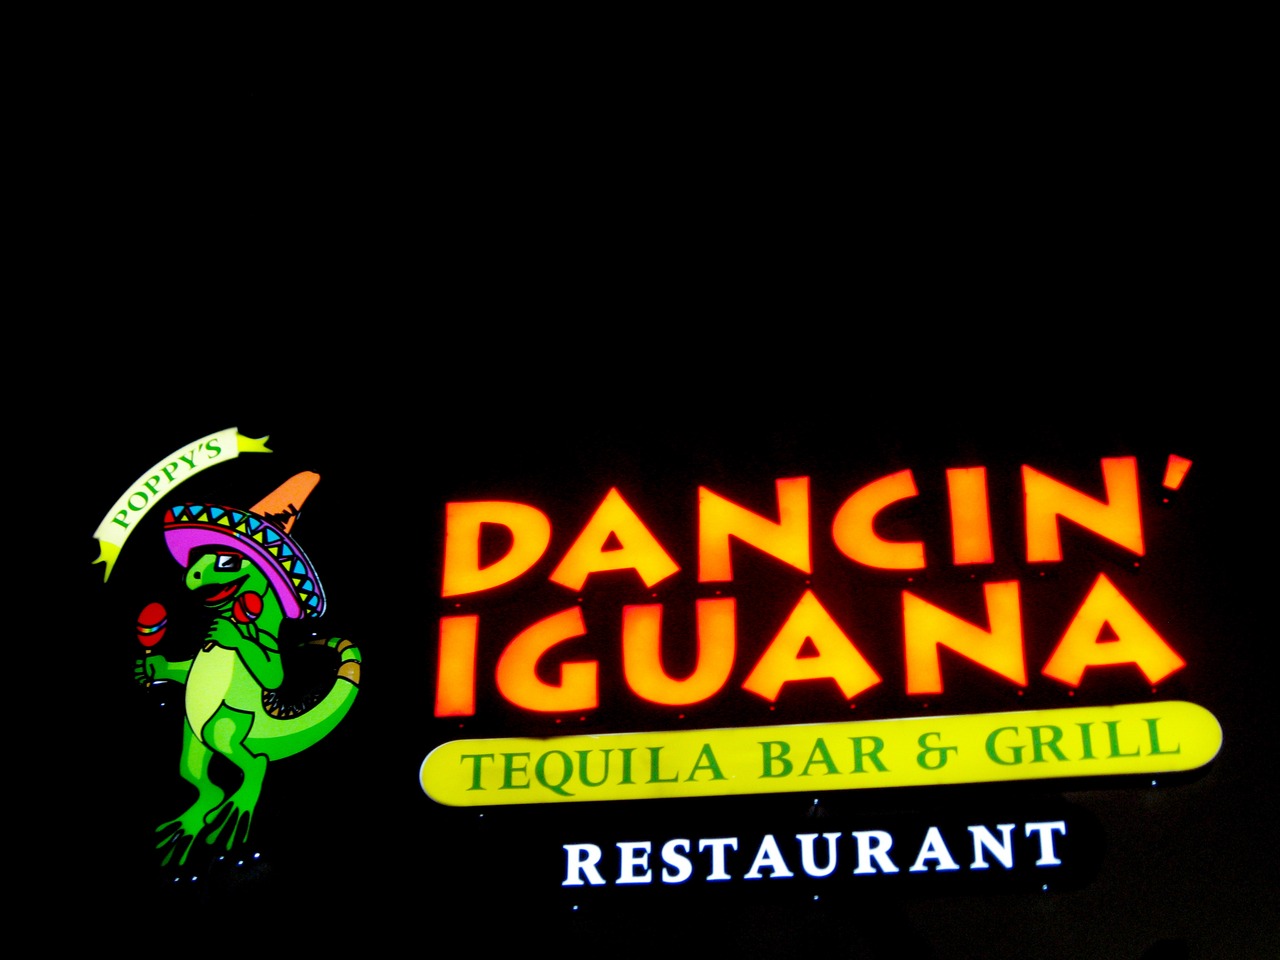 Sign for Dancin' Iguana Tequila Bar & Grill Restaurant at HarborWalk Village.